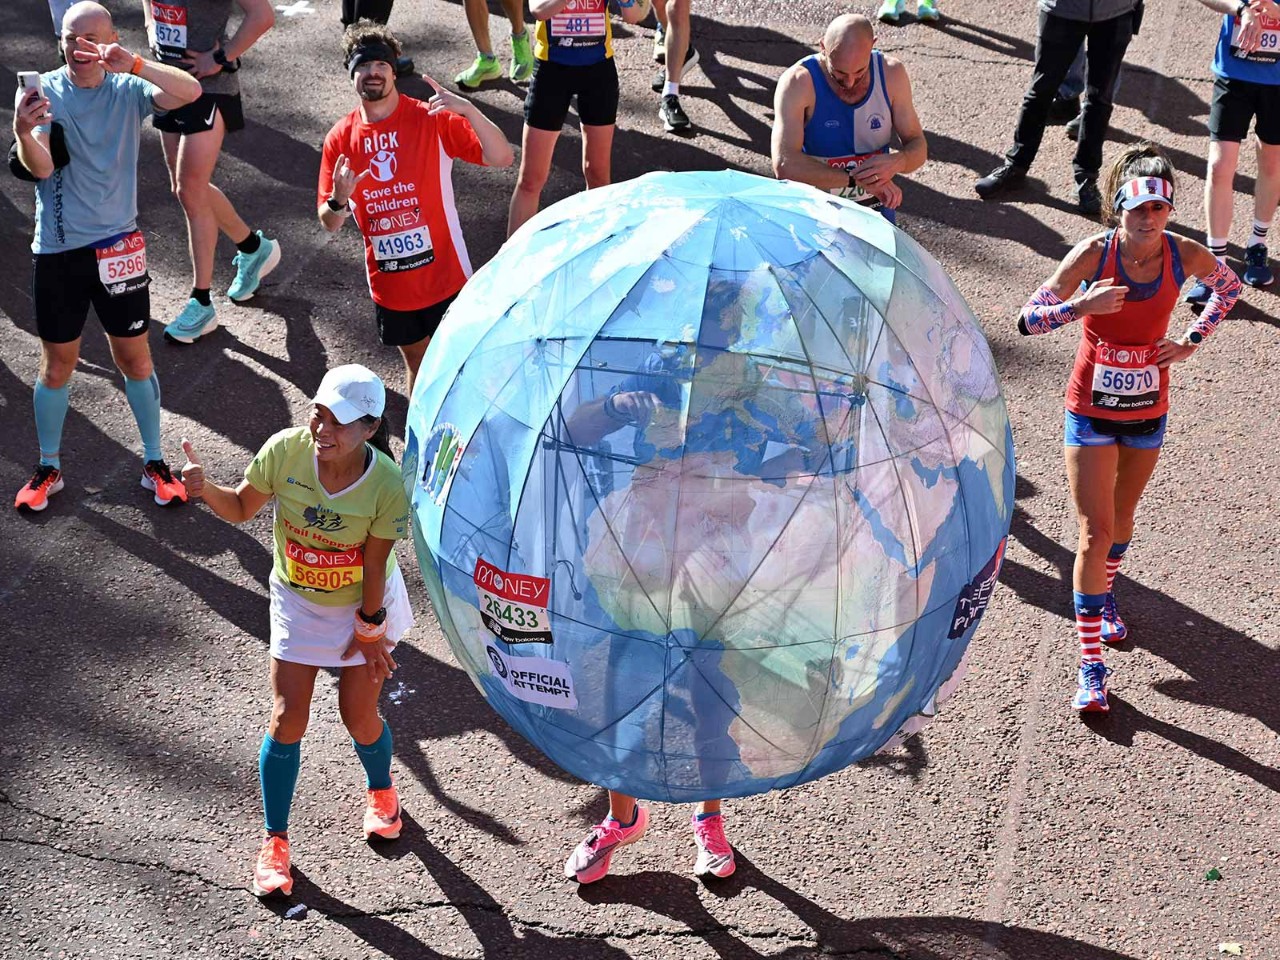 The 2021 London Marathon raised £35,754,718